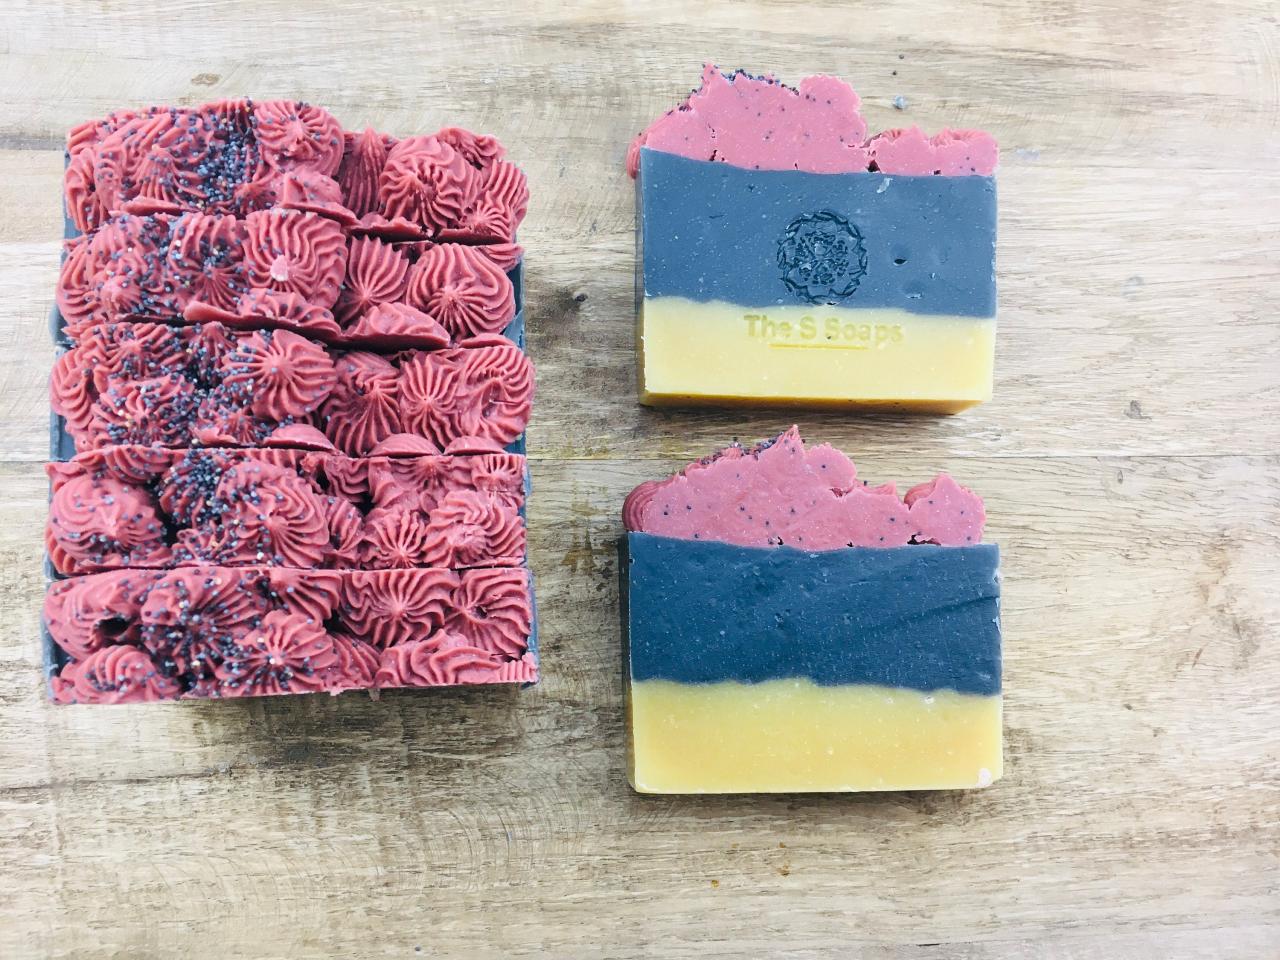 Queen 2be Soap - Natural Soap Bar - Handmade Soap - Palm Soap - Vegan Soap - Natural Soap - Moisturizing Soap.